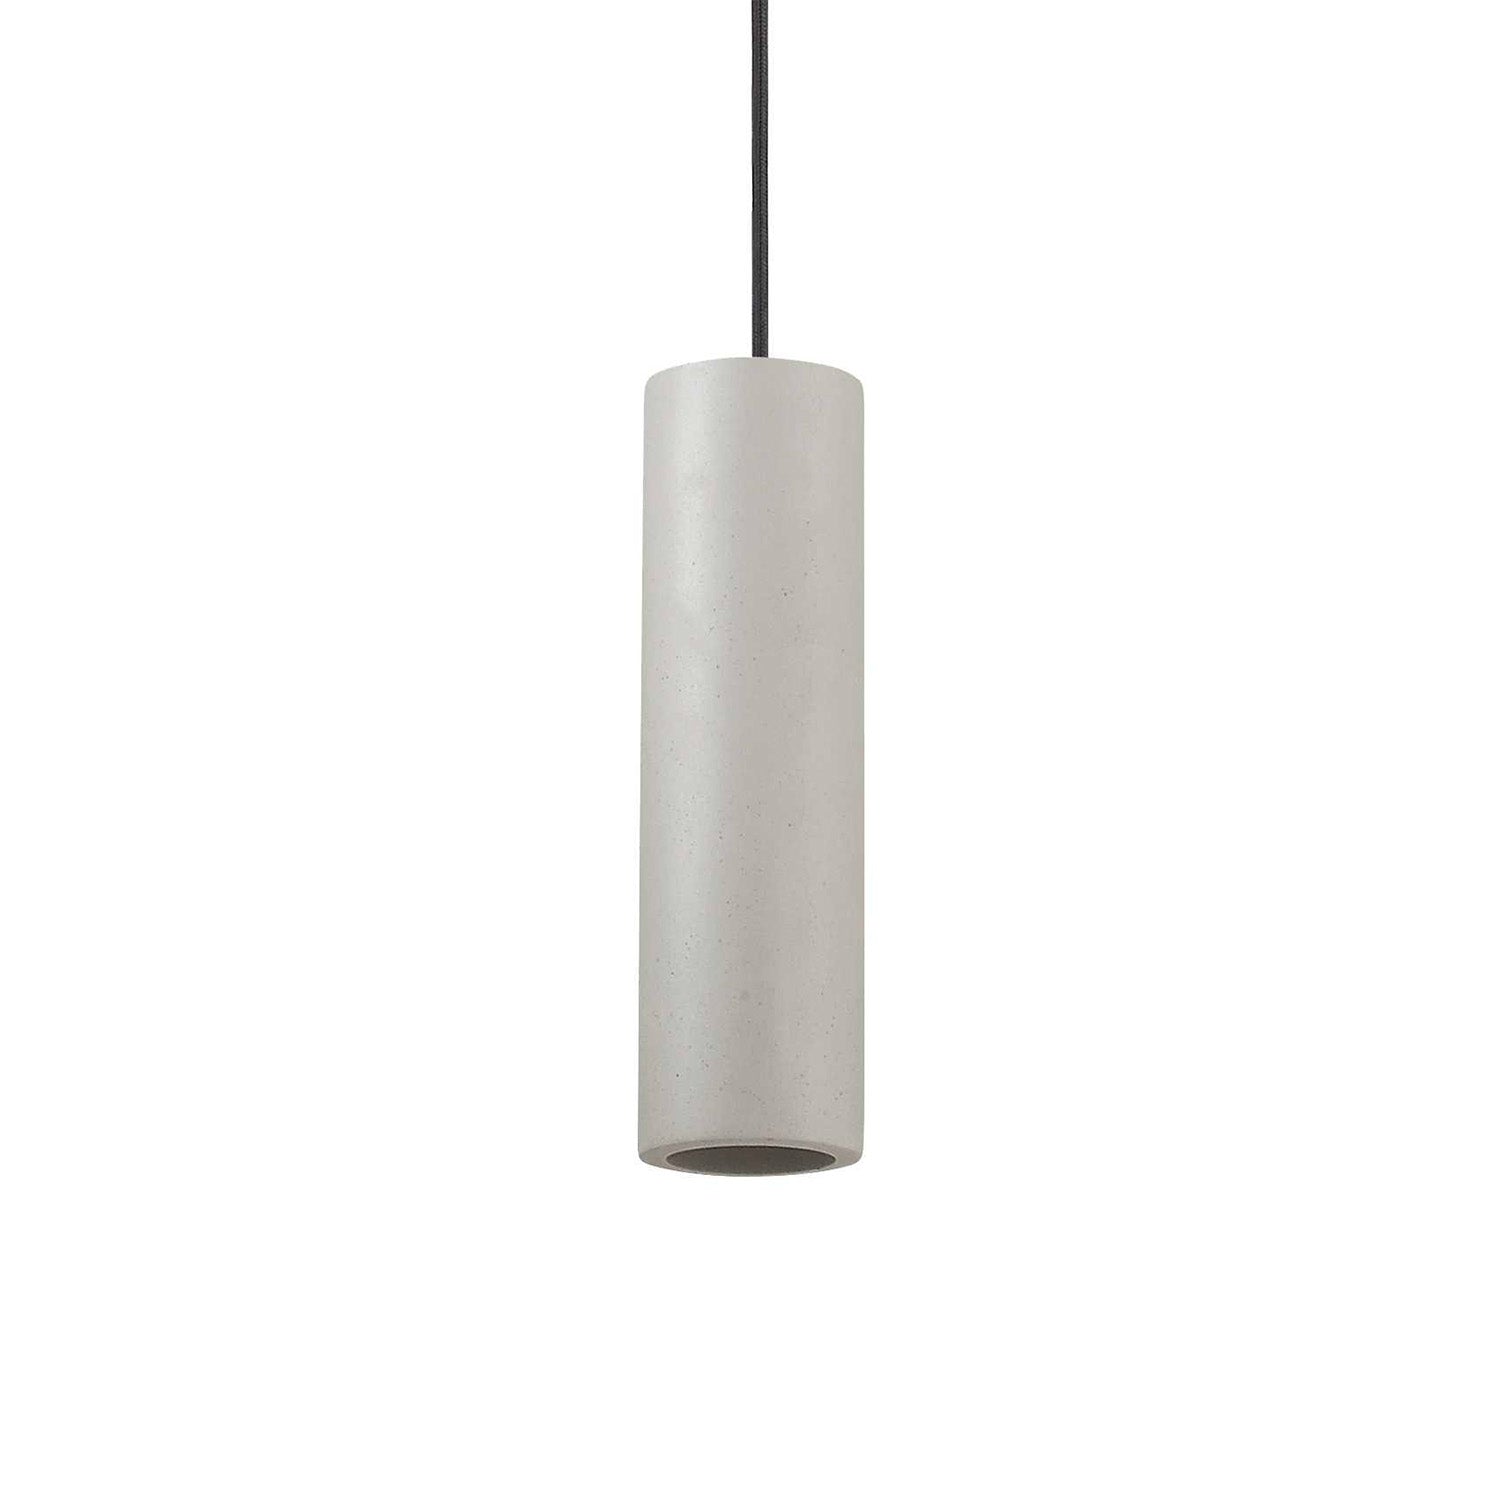 OAK - Designer concrete cylindrical pendant light